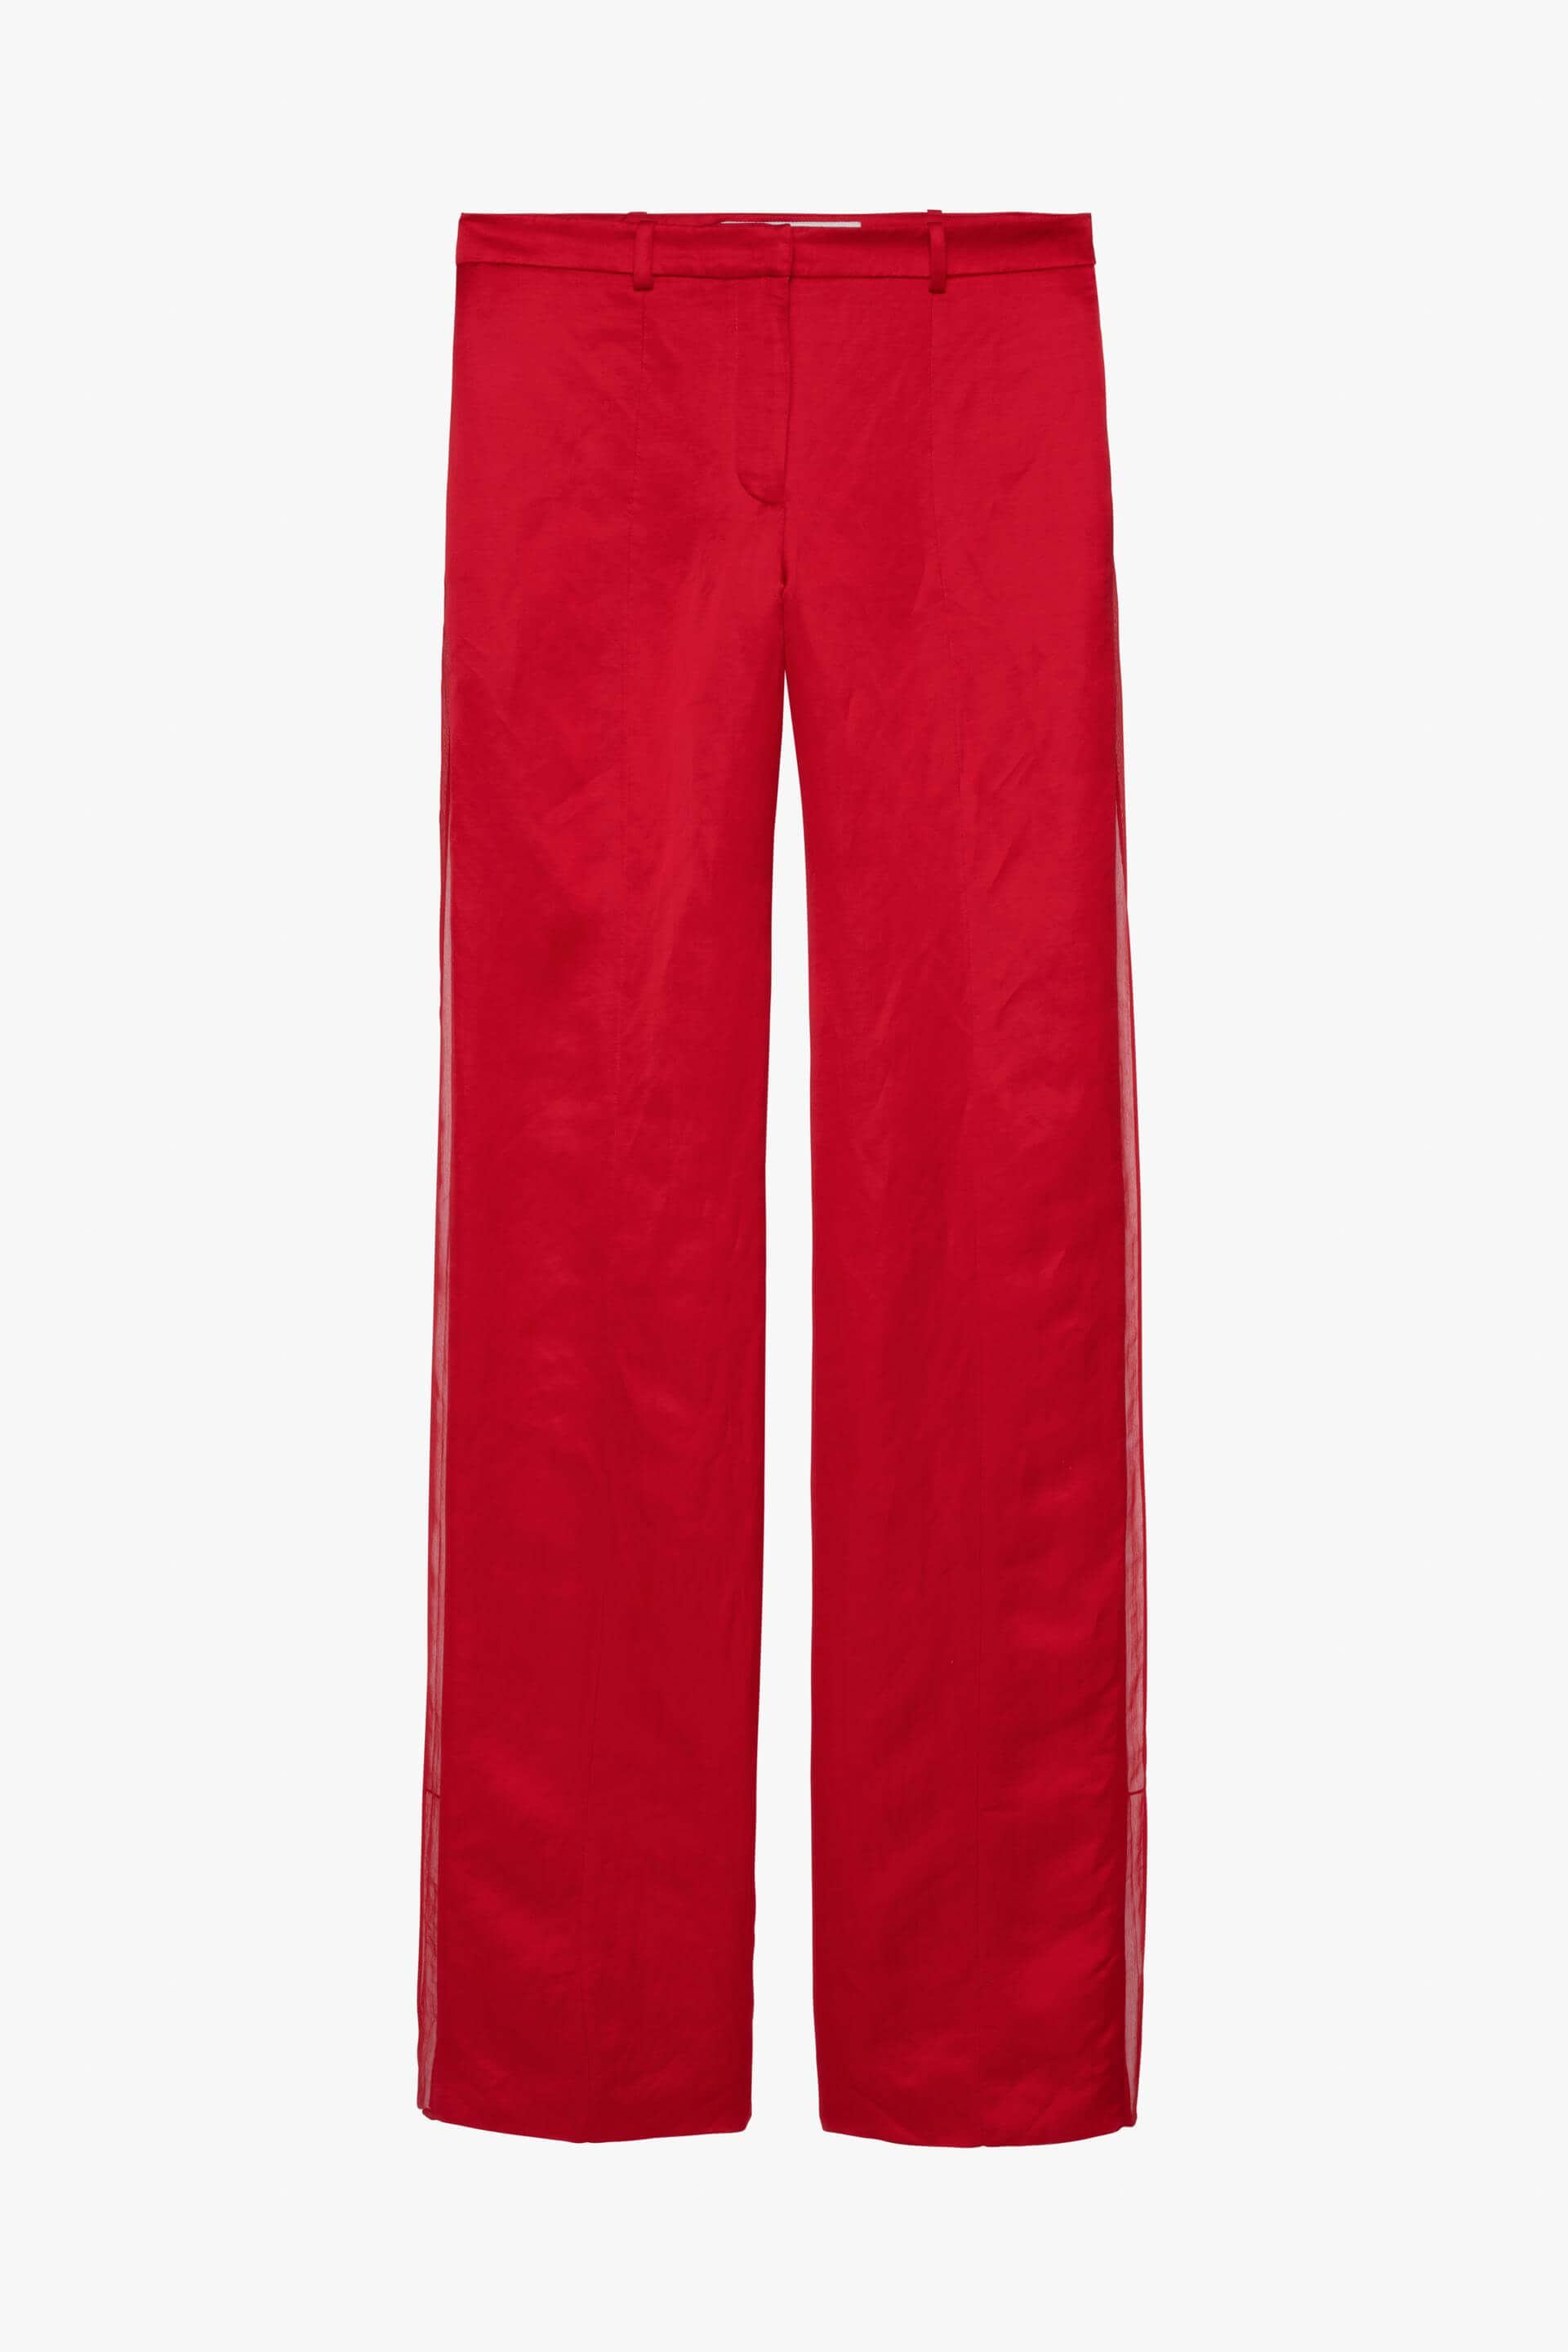 Брюки Zara Organza Satin - Limited Edition, красный рубашка zara contrast organza satin светло бежевый